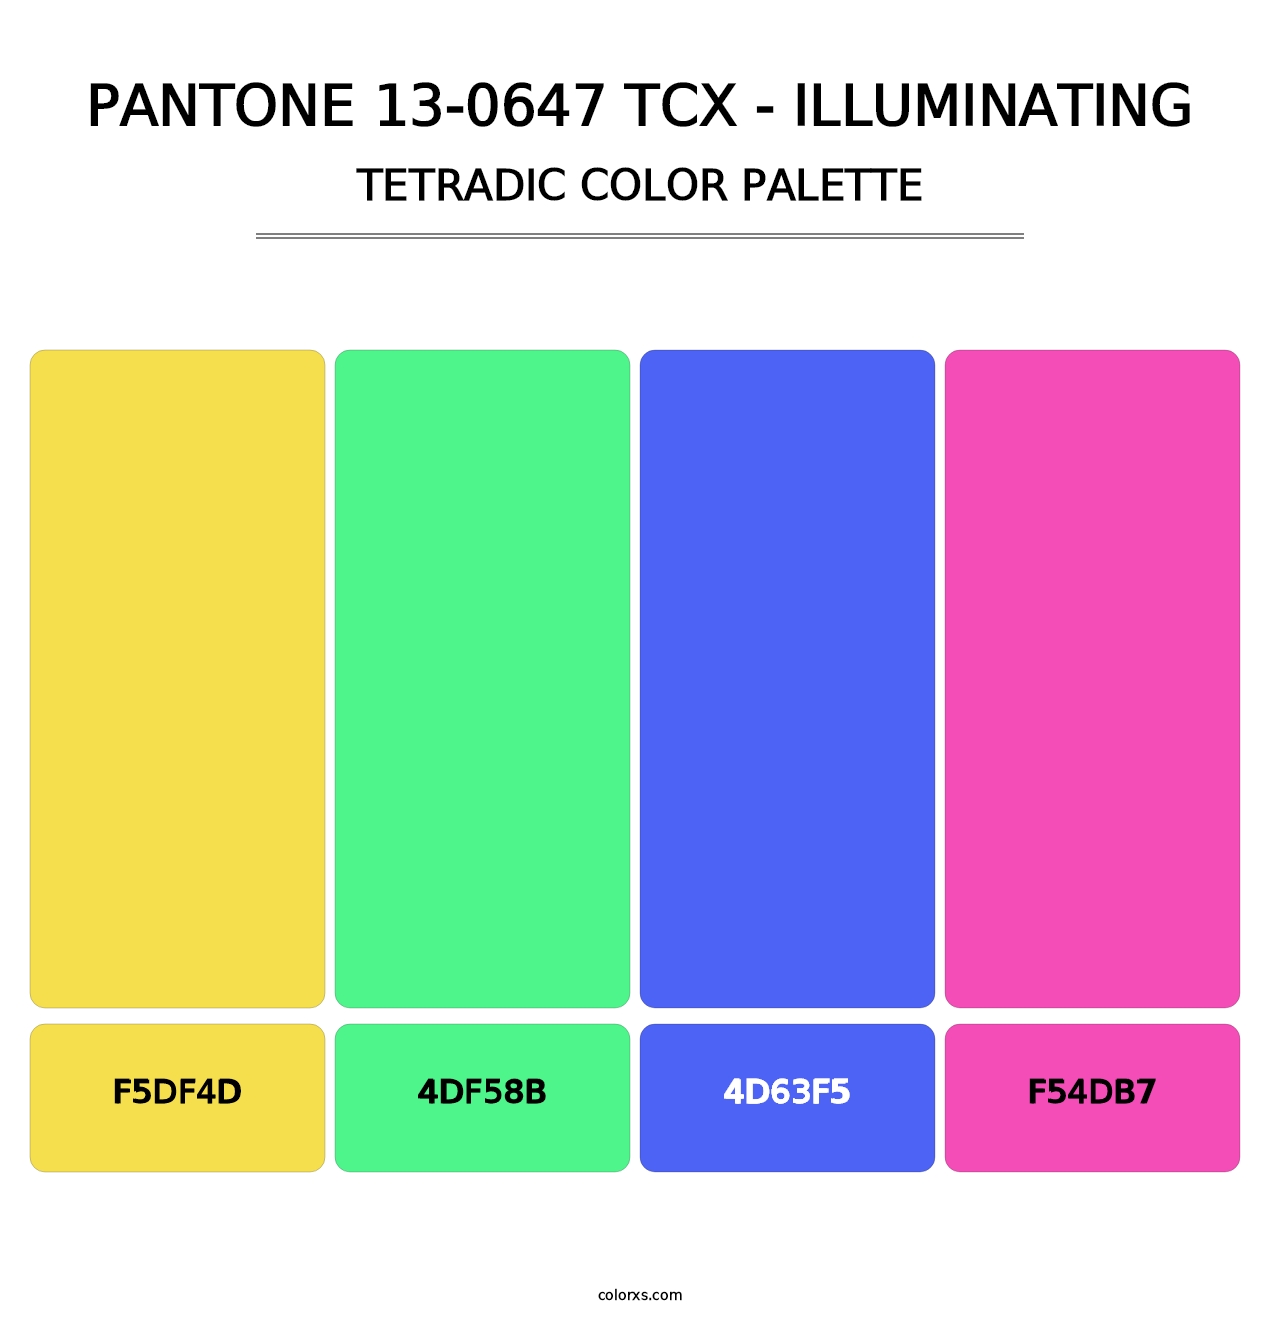 PANTONE 13-0647 TCX - Illuminating - Tetradic Color Palette